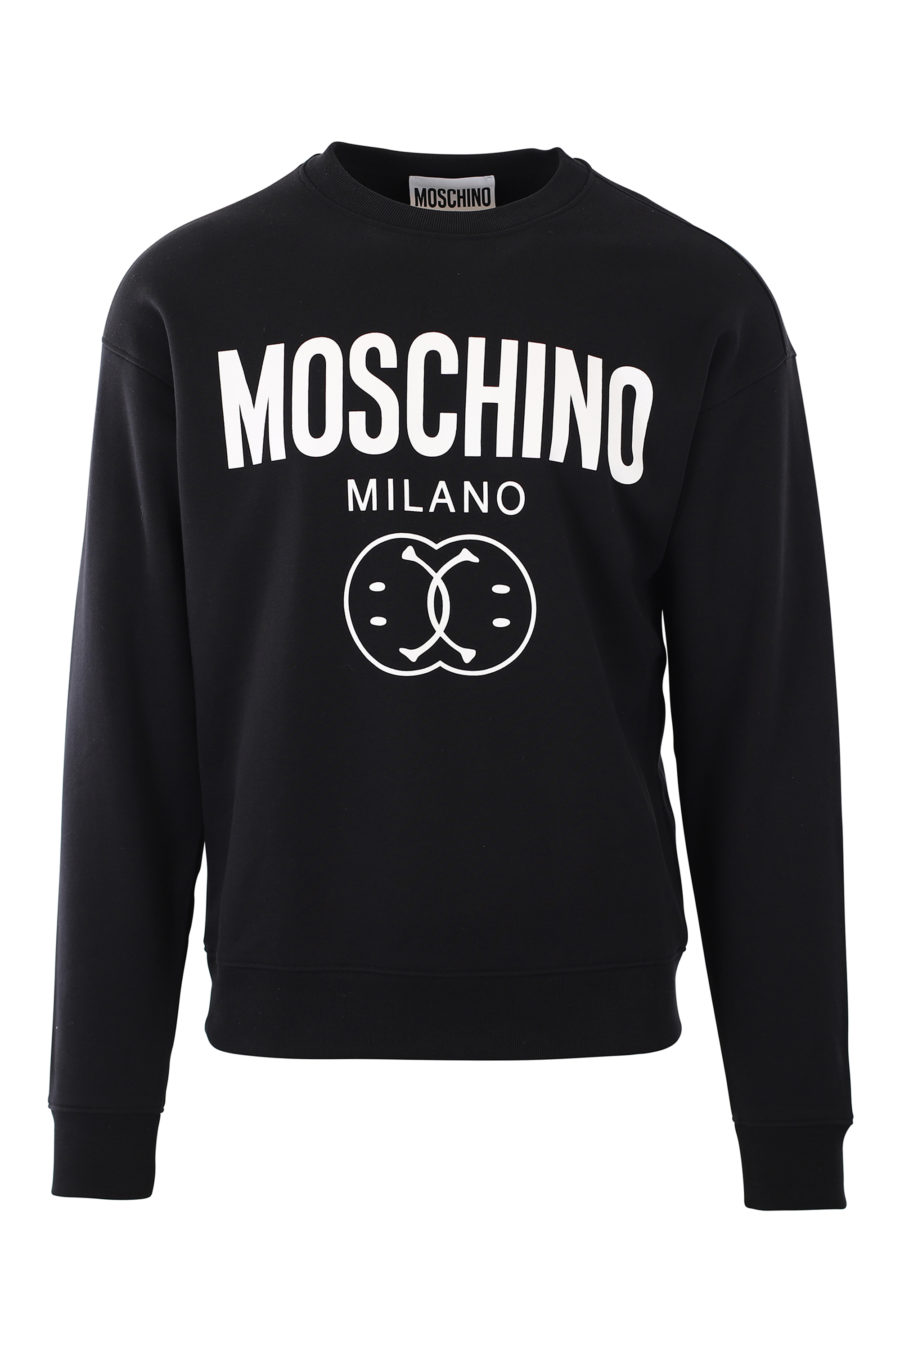 Schwarzes Sweatshirt mit milano "smiley" Logo - IMG 2416